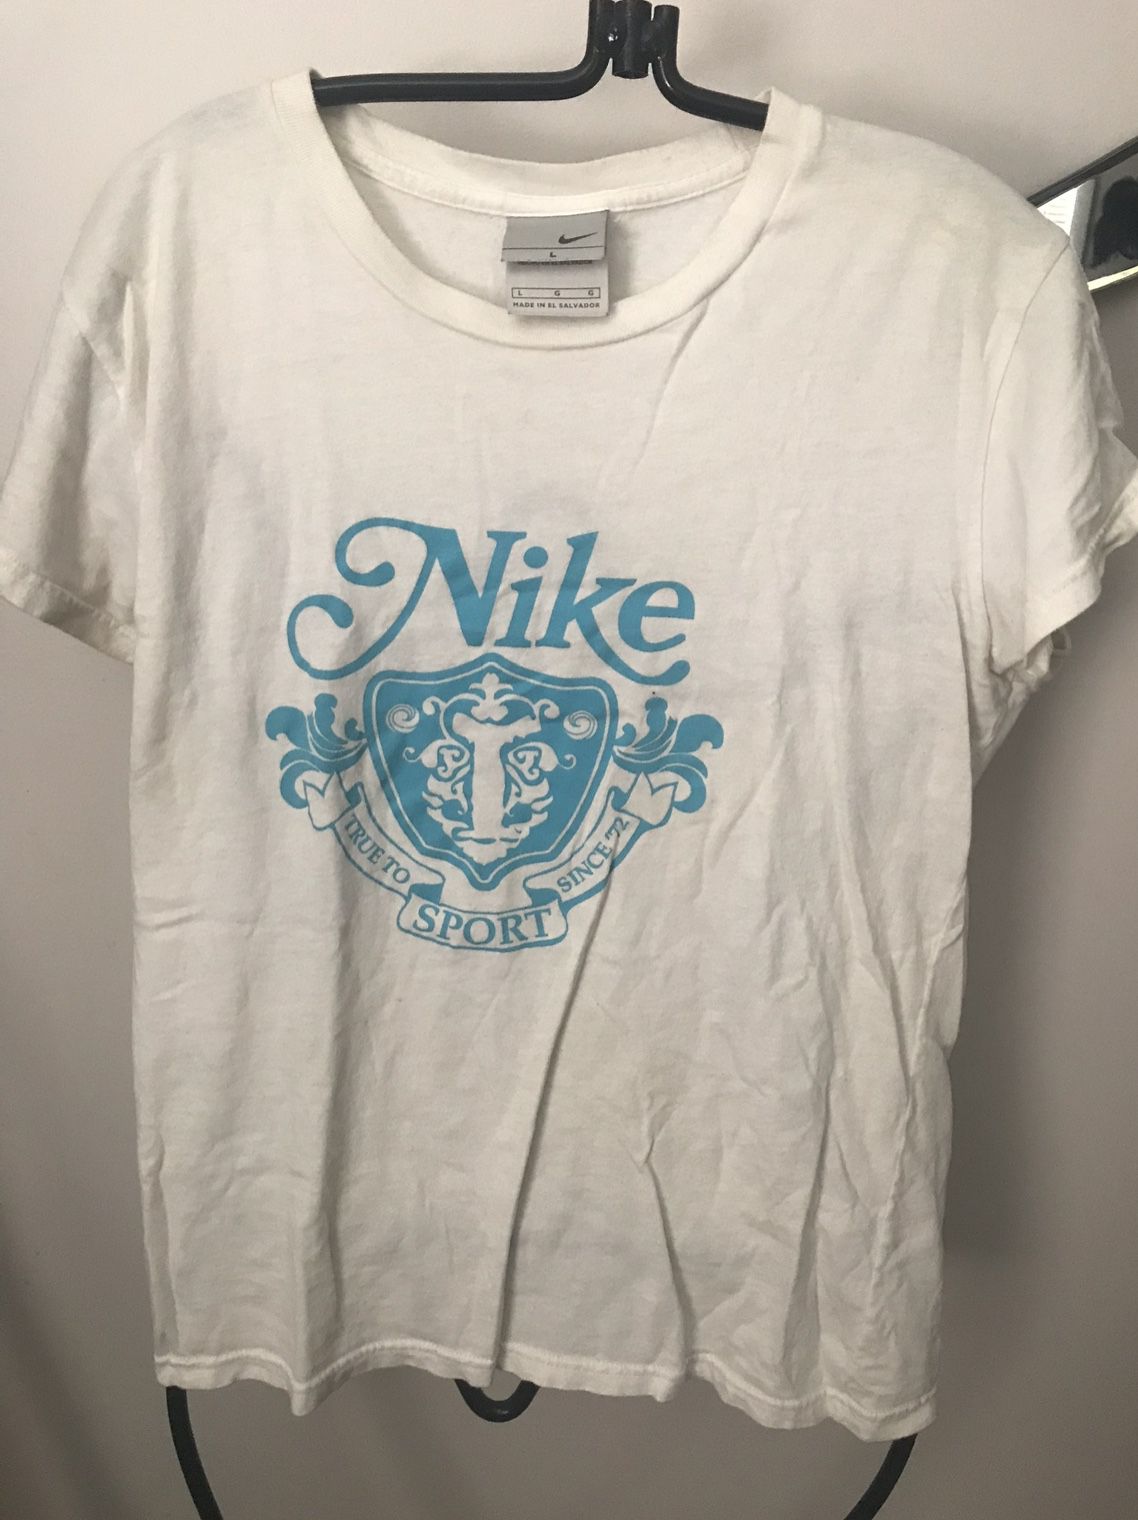 Womans Large Nike White T-shirt Blue Teal Print